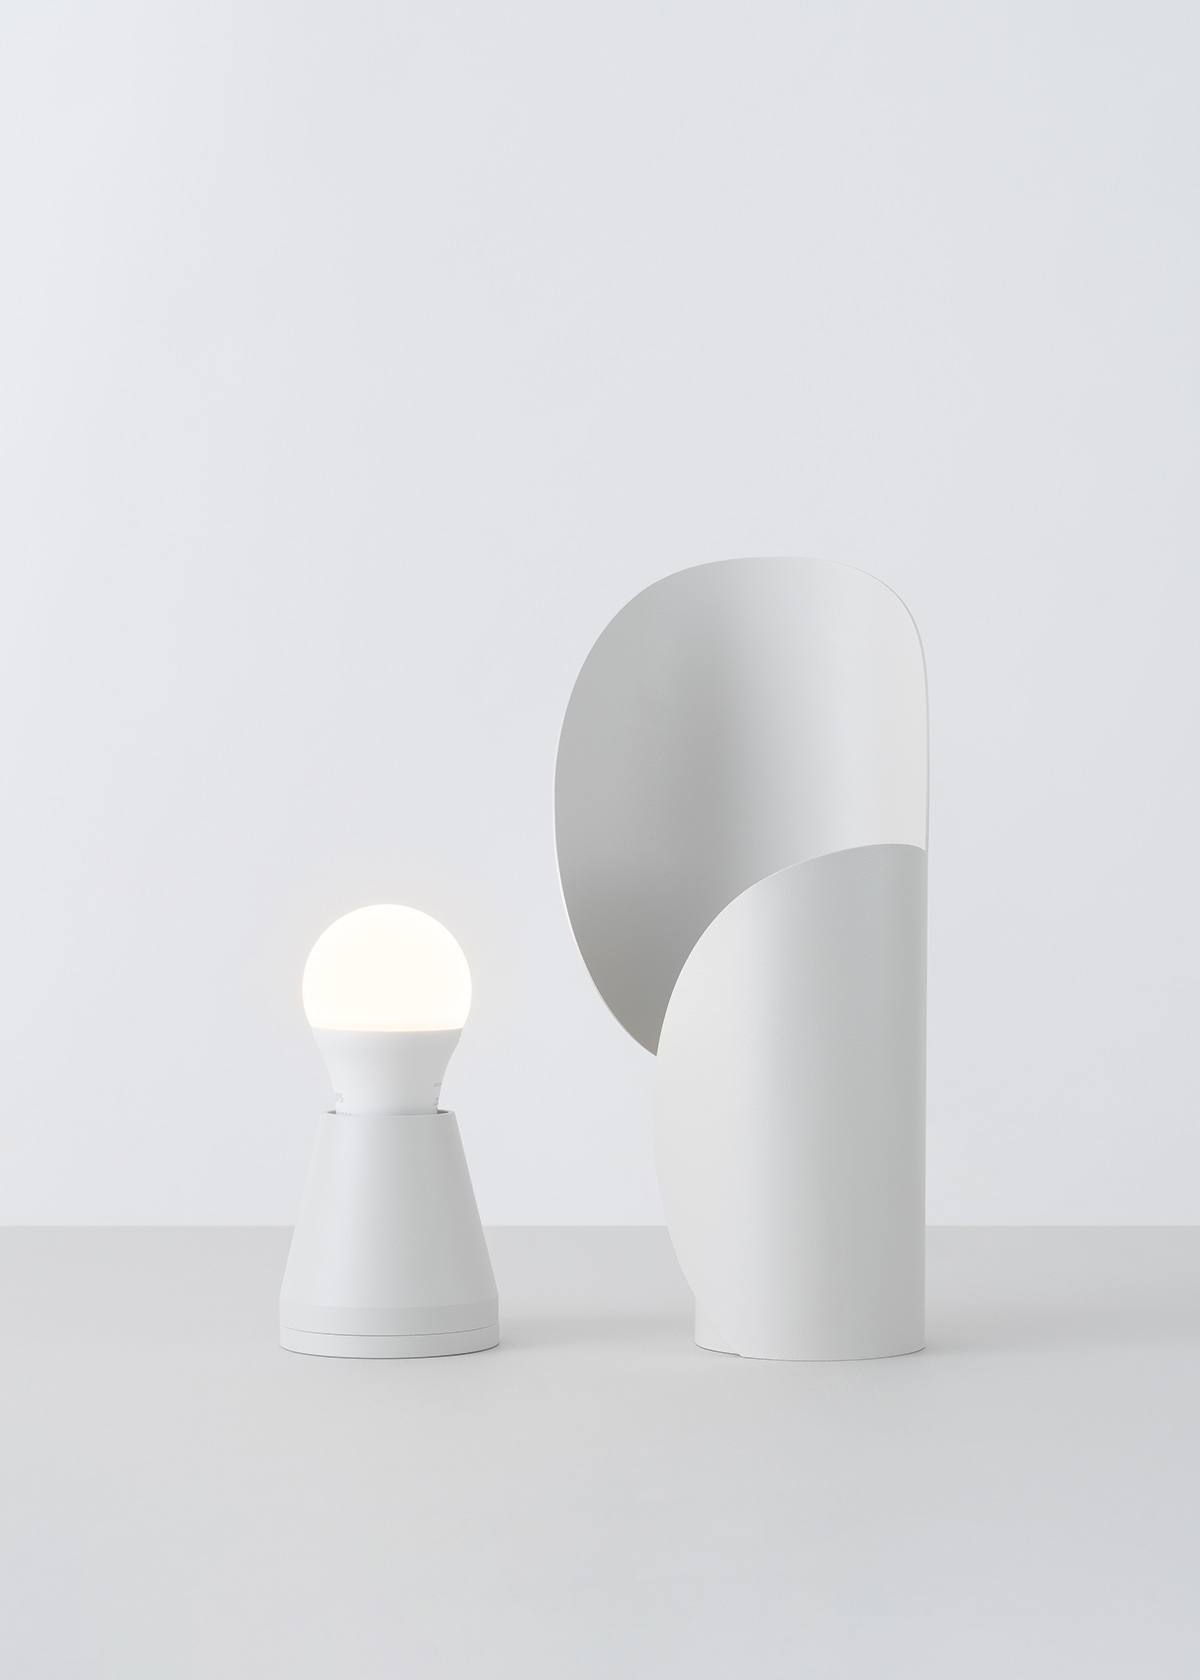 design jaerryfolio Lamp liberal office lighting limas product design  SWNA 이석우 이윤재